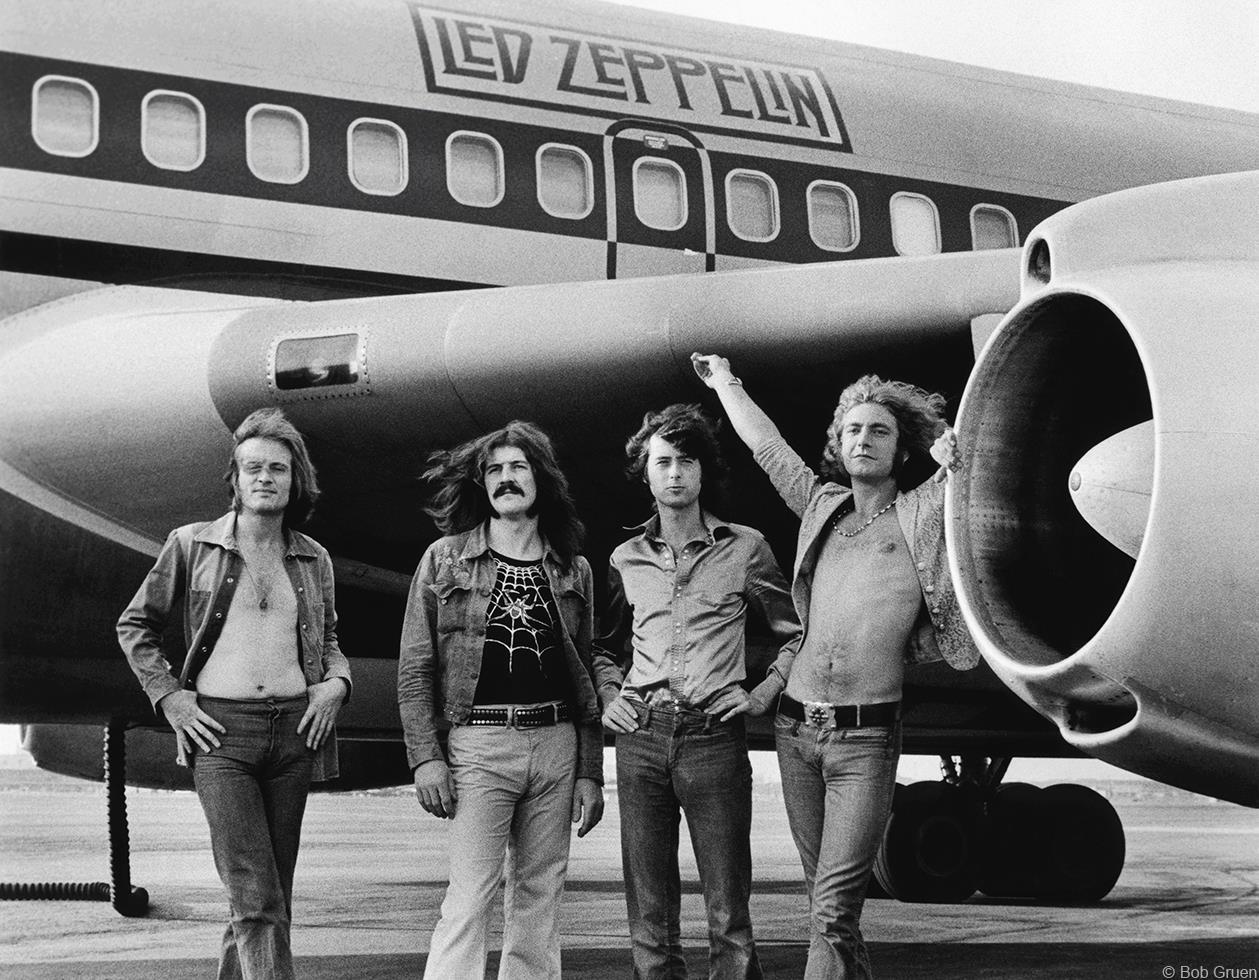 Bob Gruen Portrait Photograph - Led Zeppelin in front of The Starship, 1973